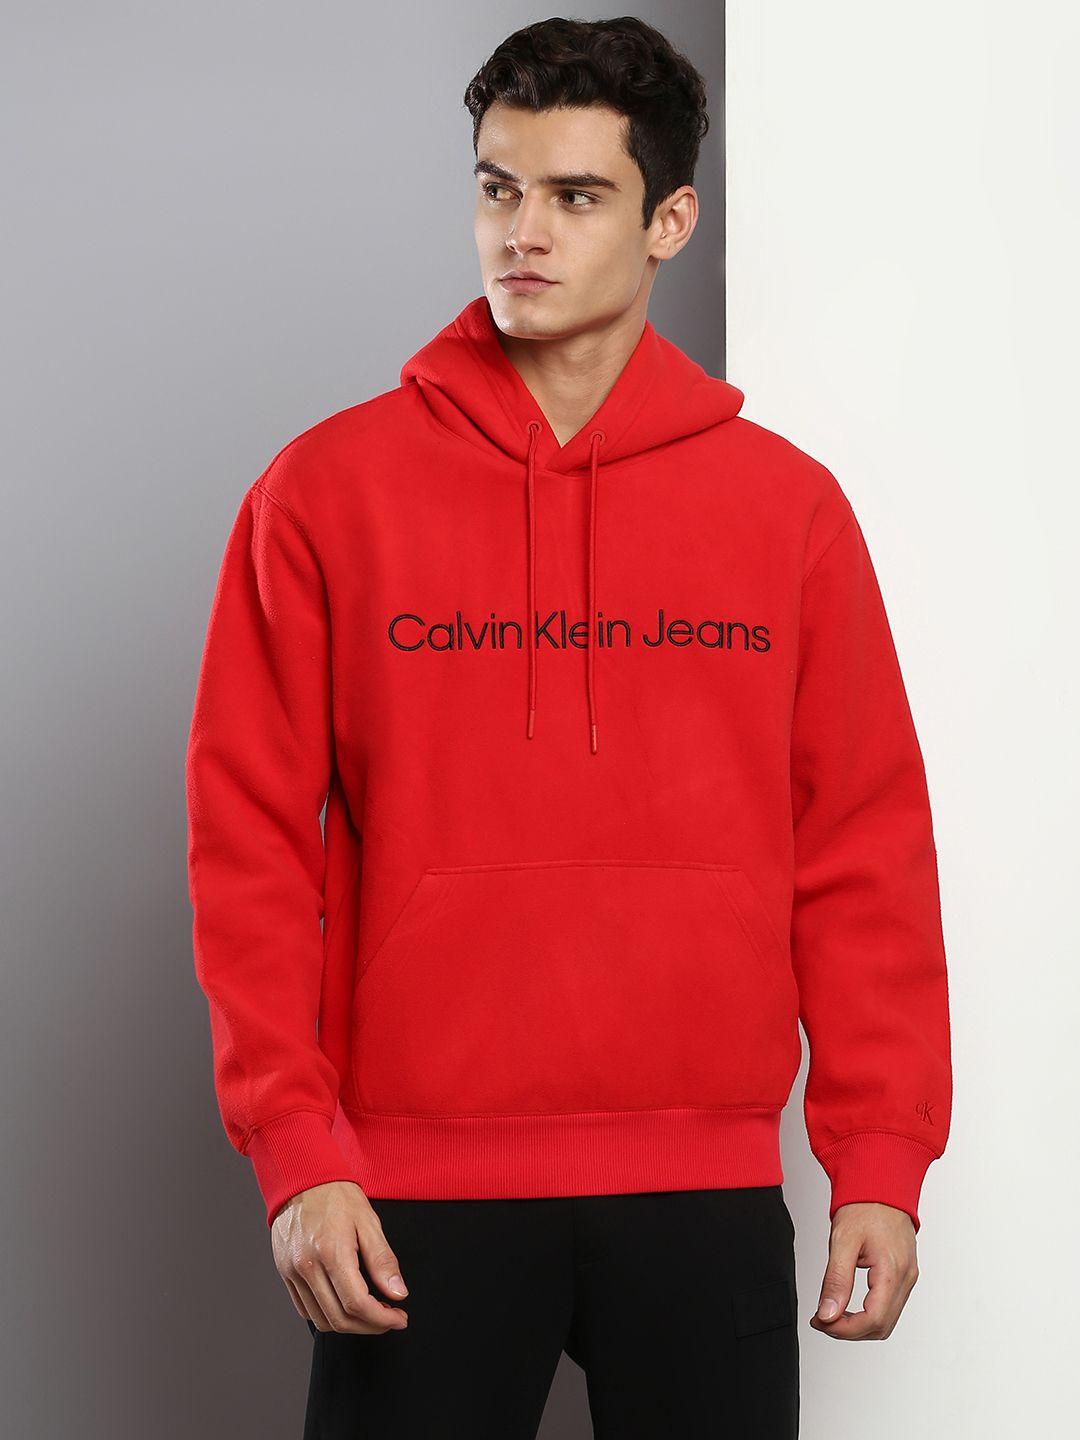 calvin klein jeans men red brand logo embroidered hooded sweatshirt